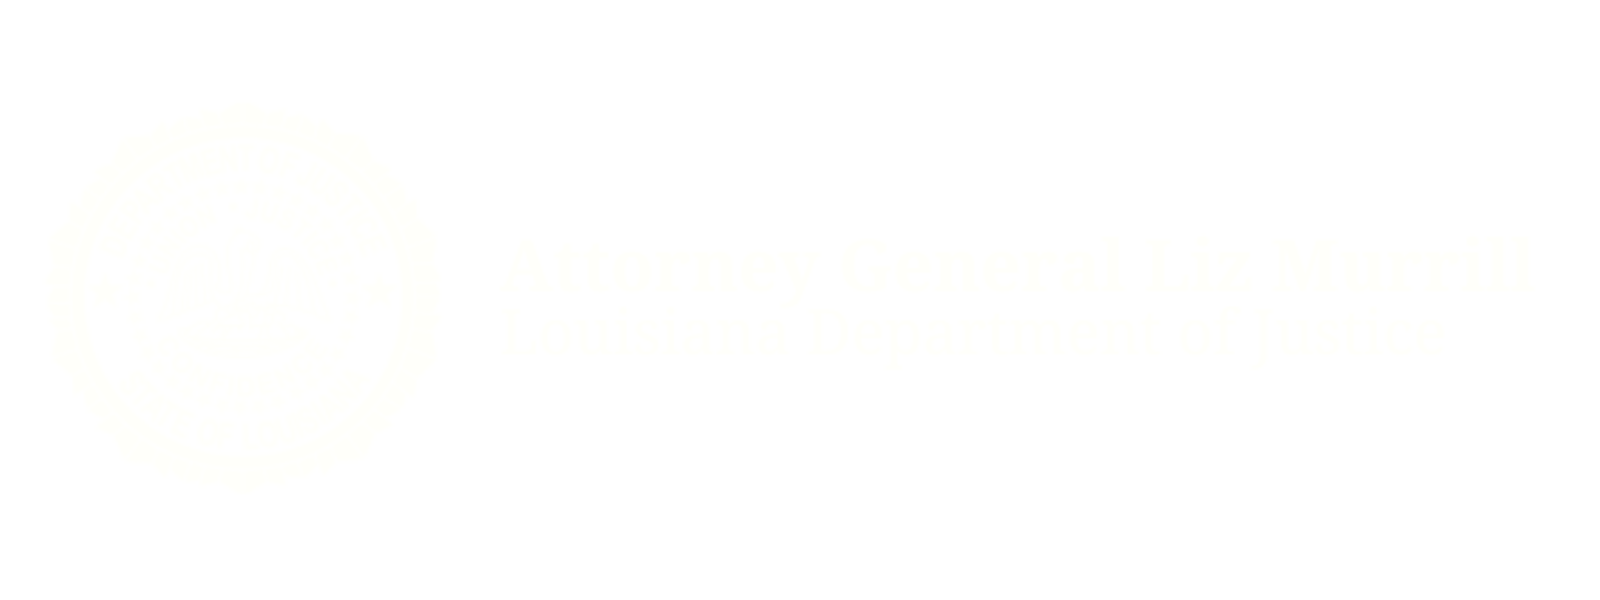 Louisiana Department of Justice